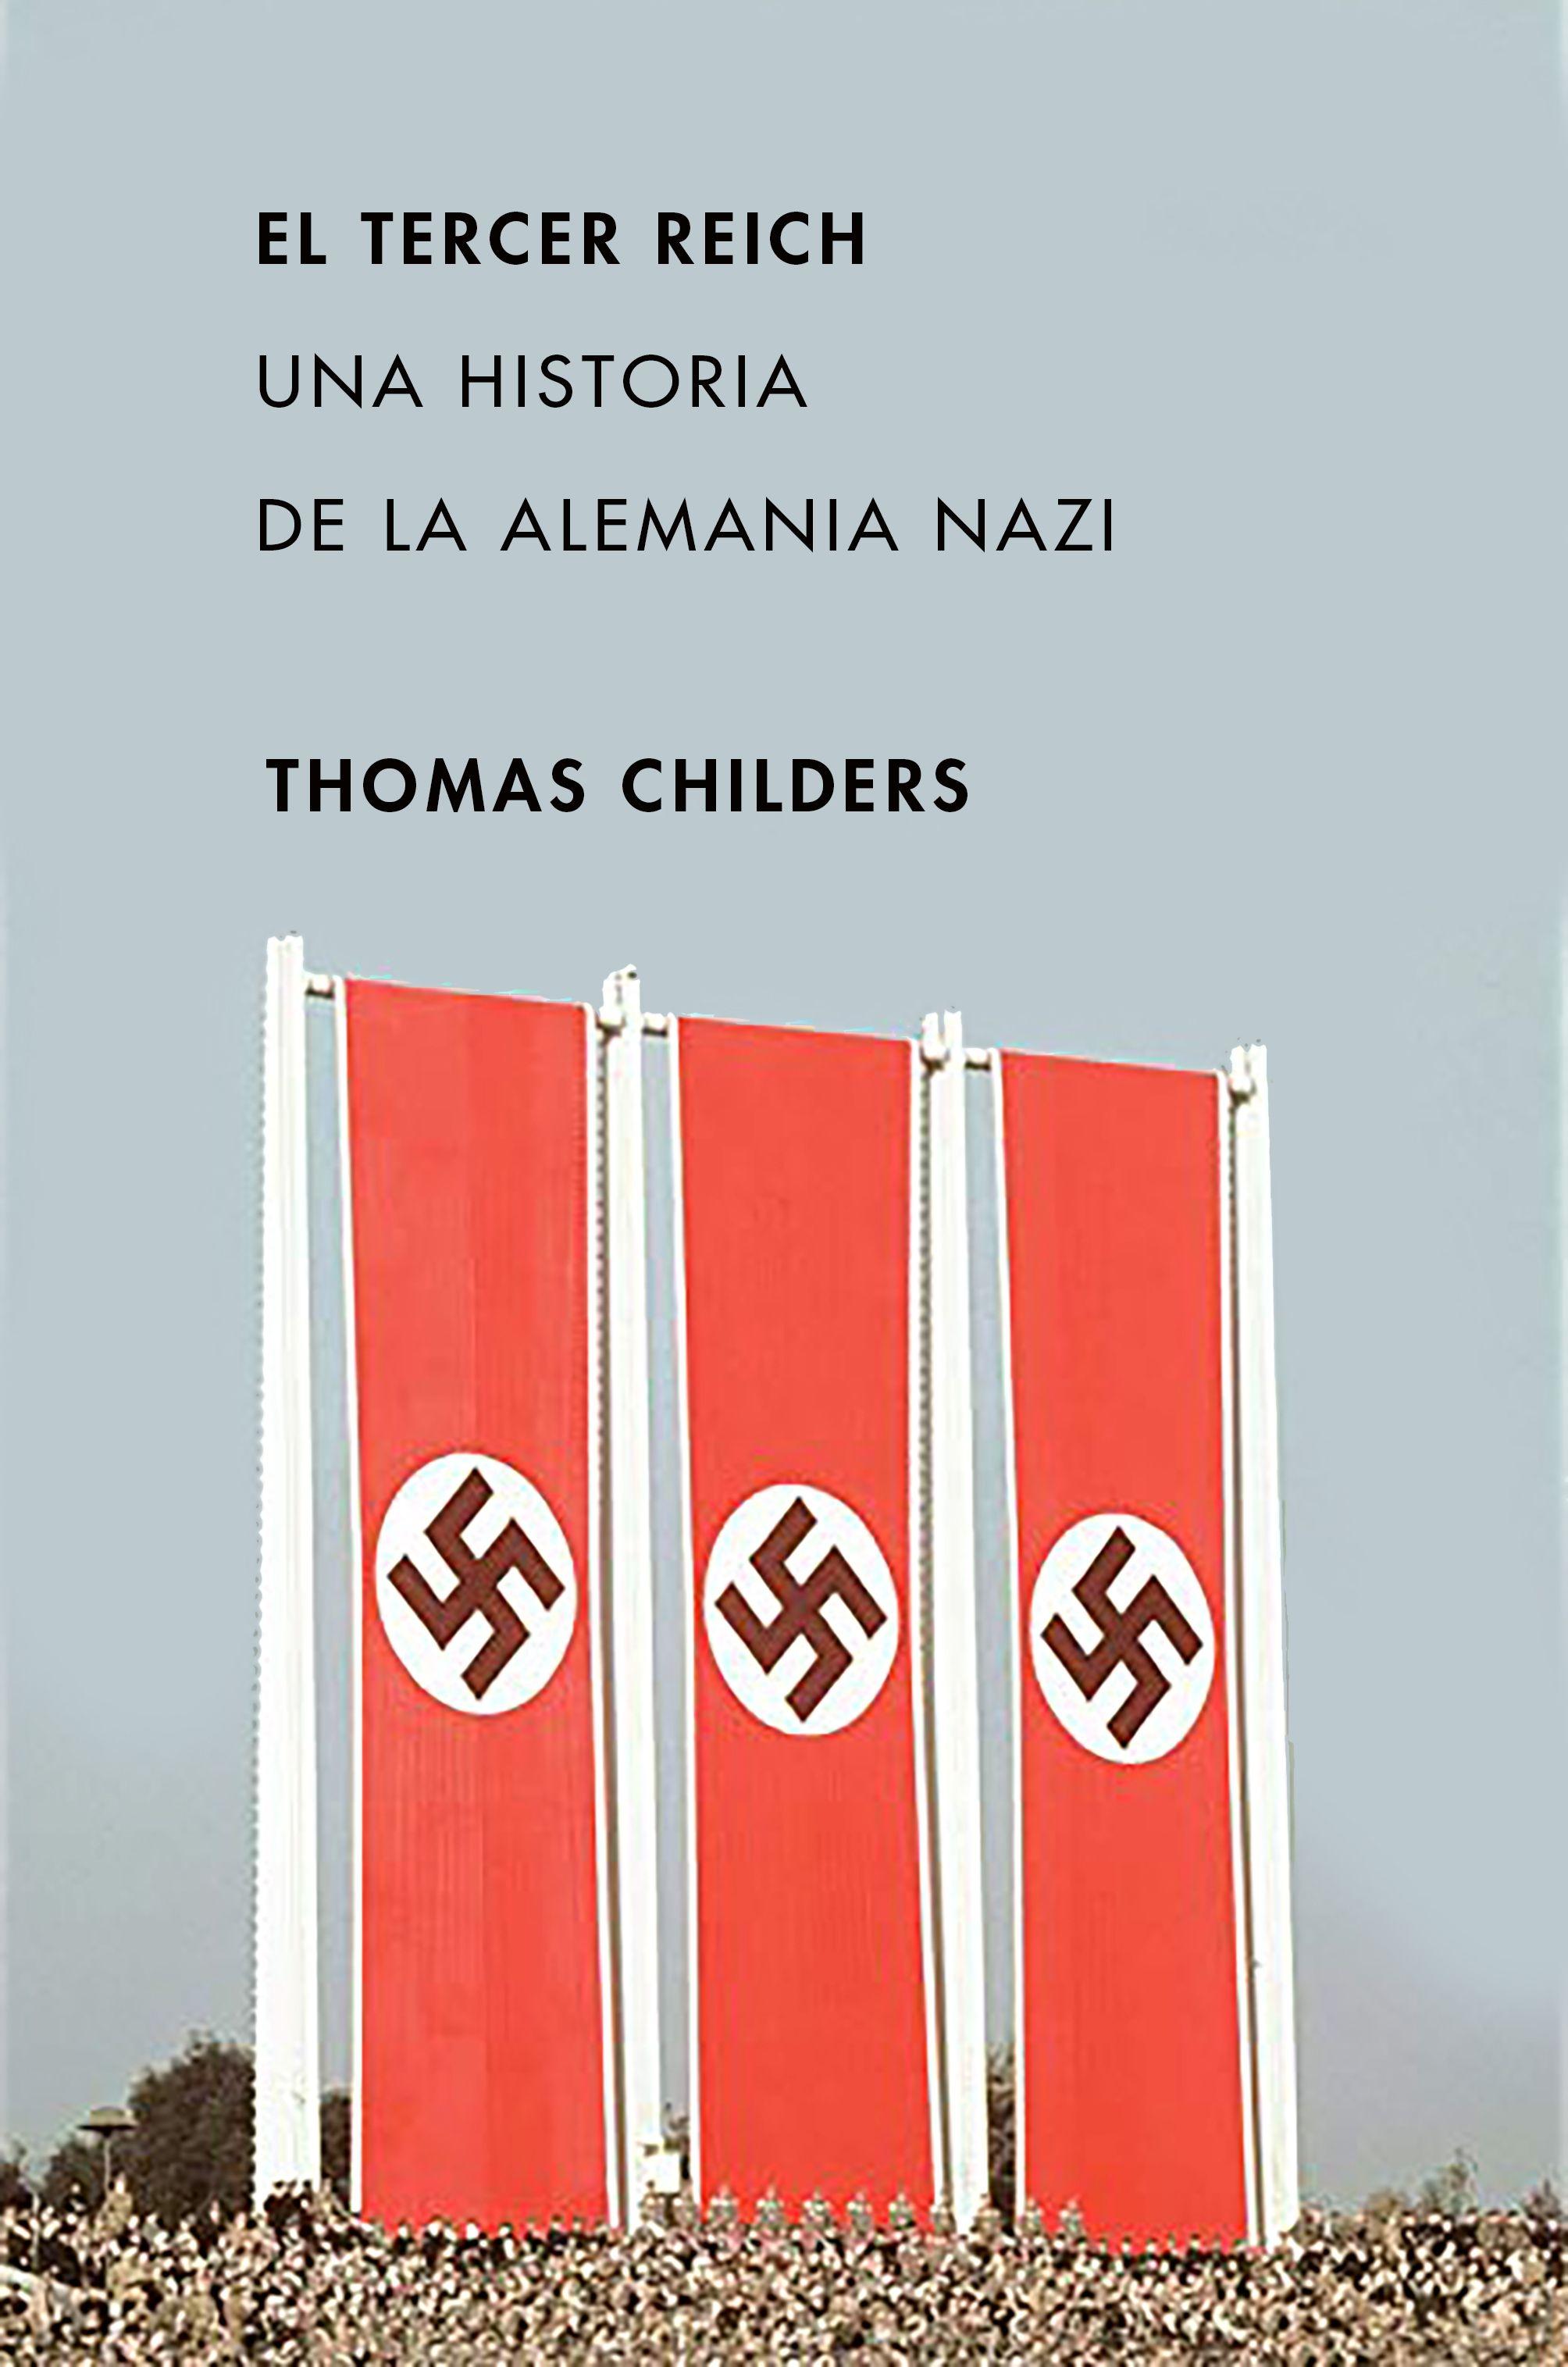 El Tercer Reich "Una Historia de la Alemania Nazi"